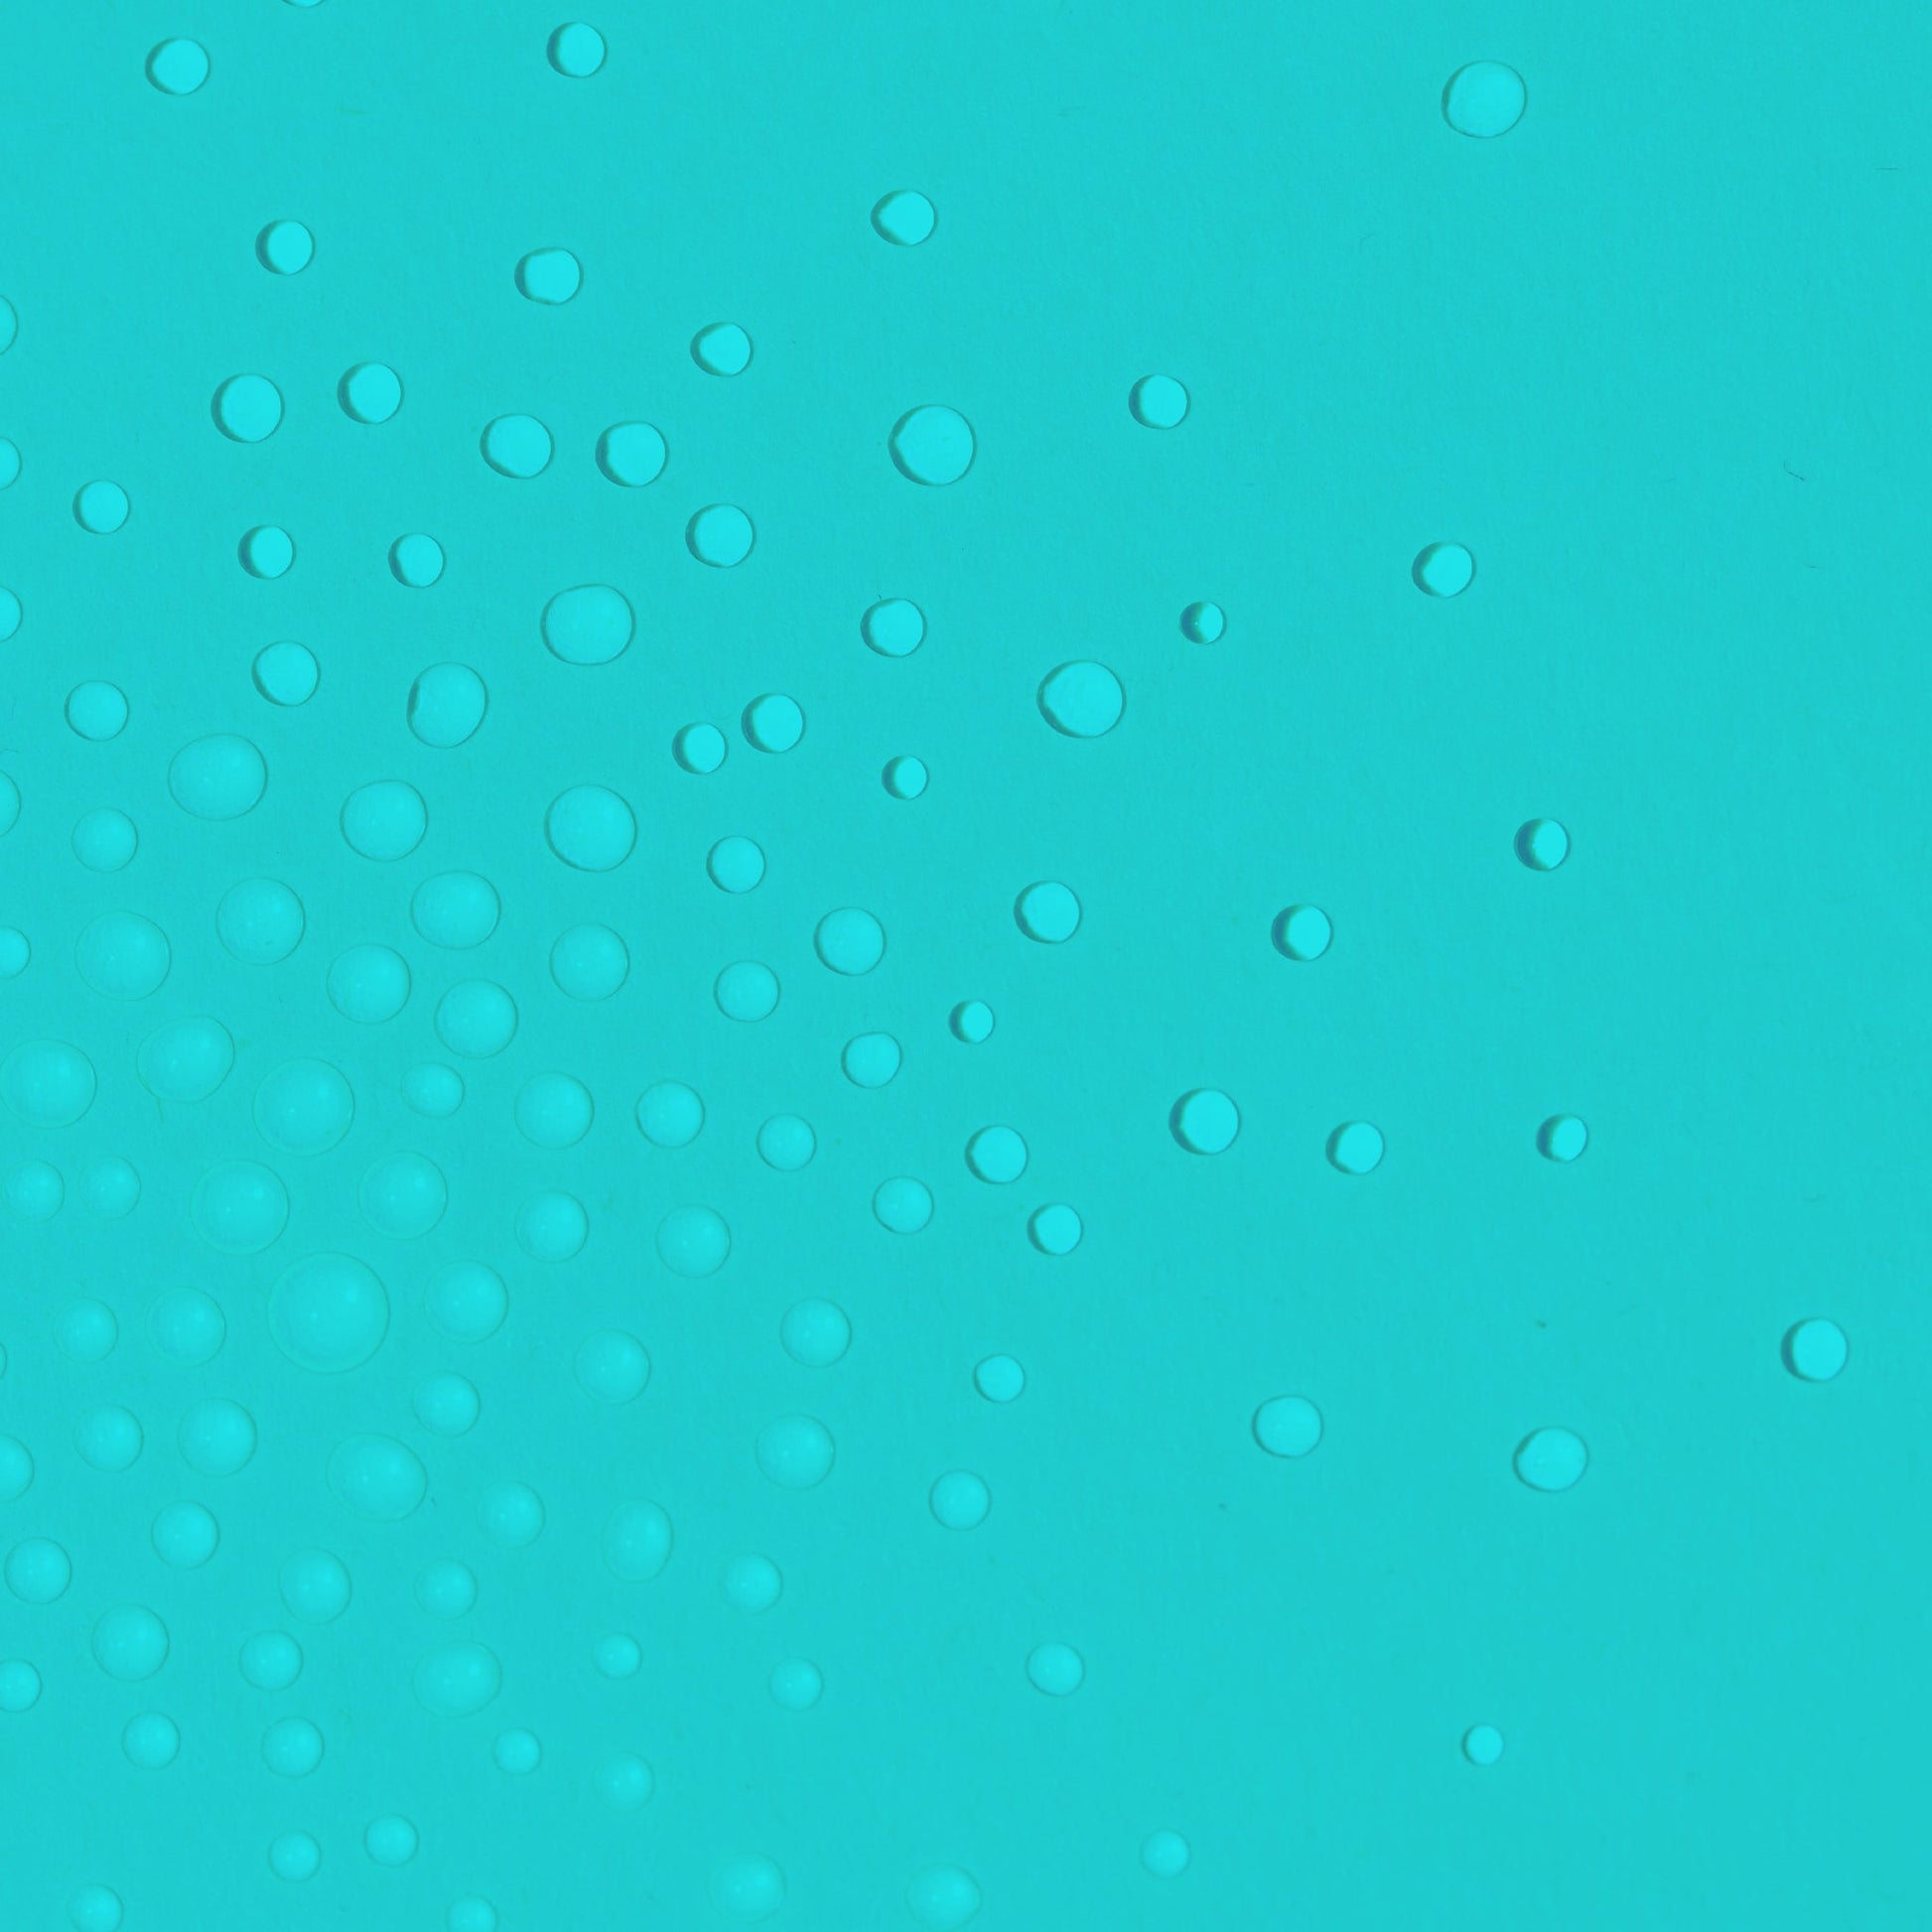 Micro-Pore Mist droplets